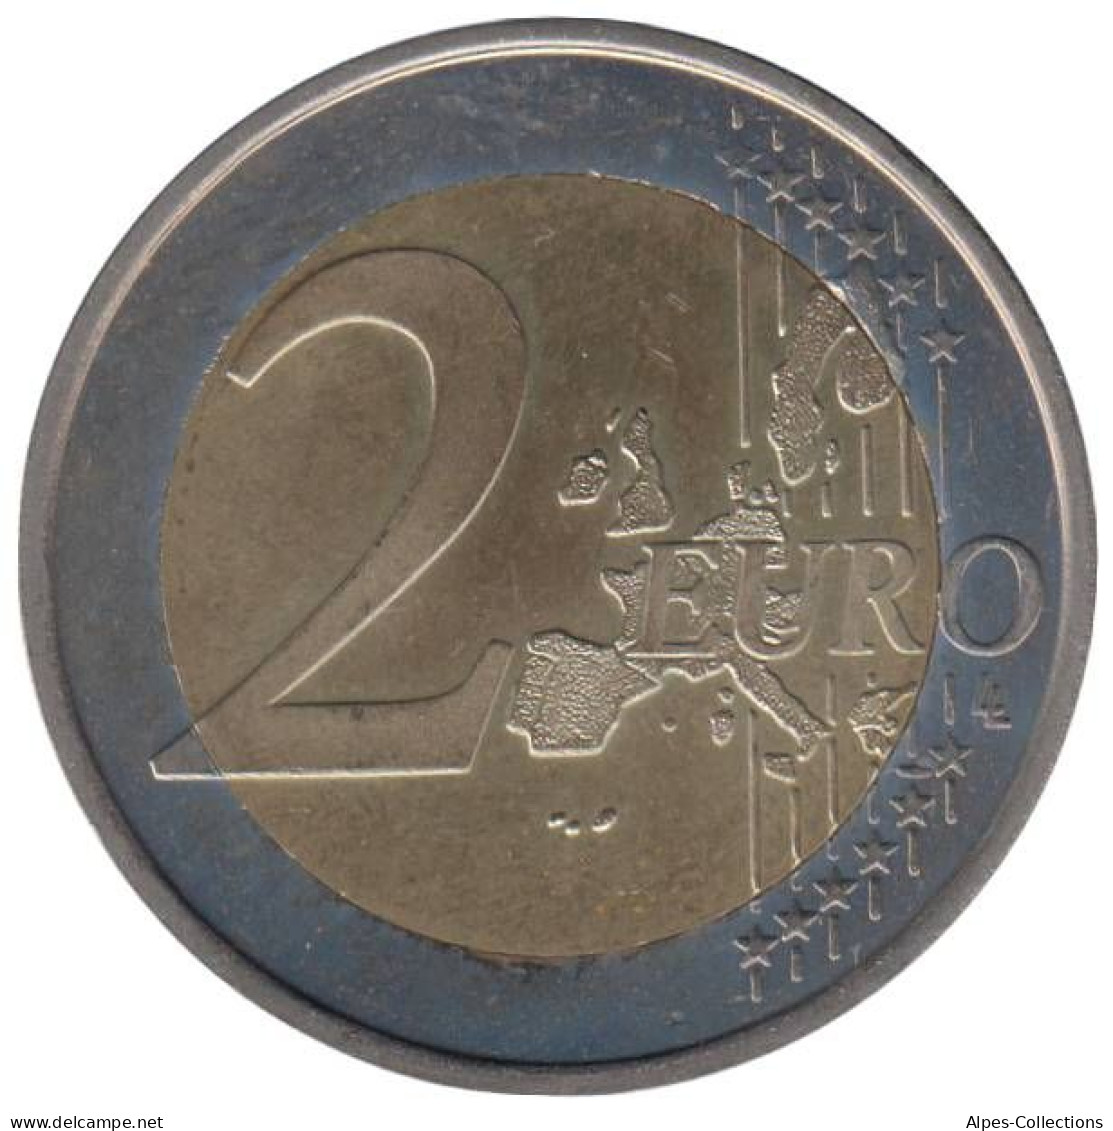 LU20005.2 - LUXEMBOURG - 2 Euros - 2005 - Luxemburg